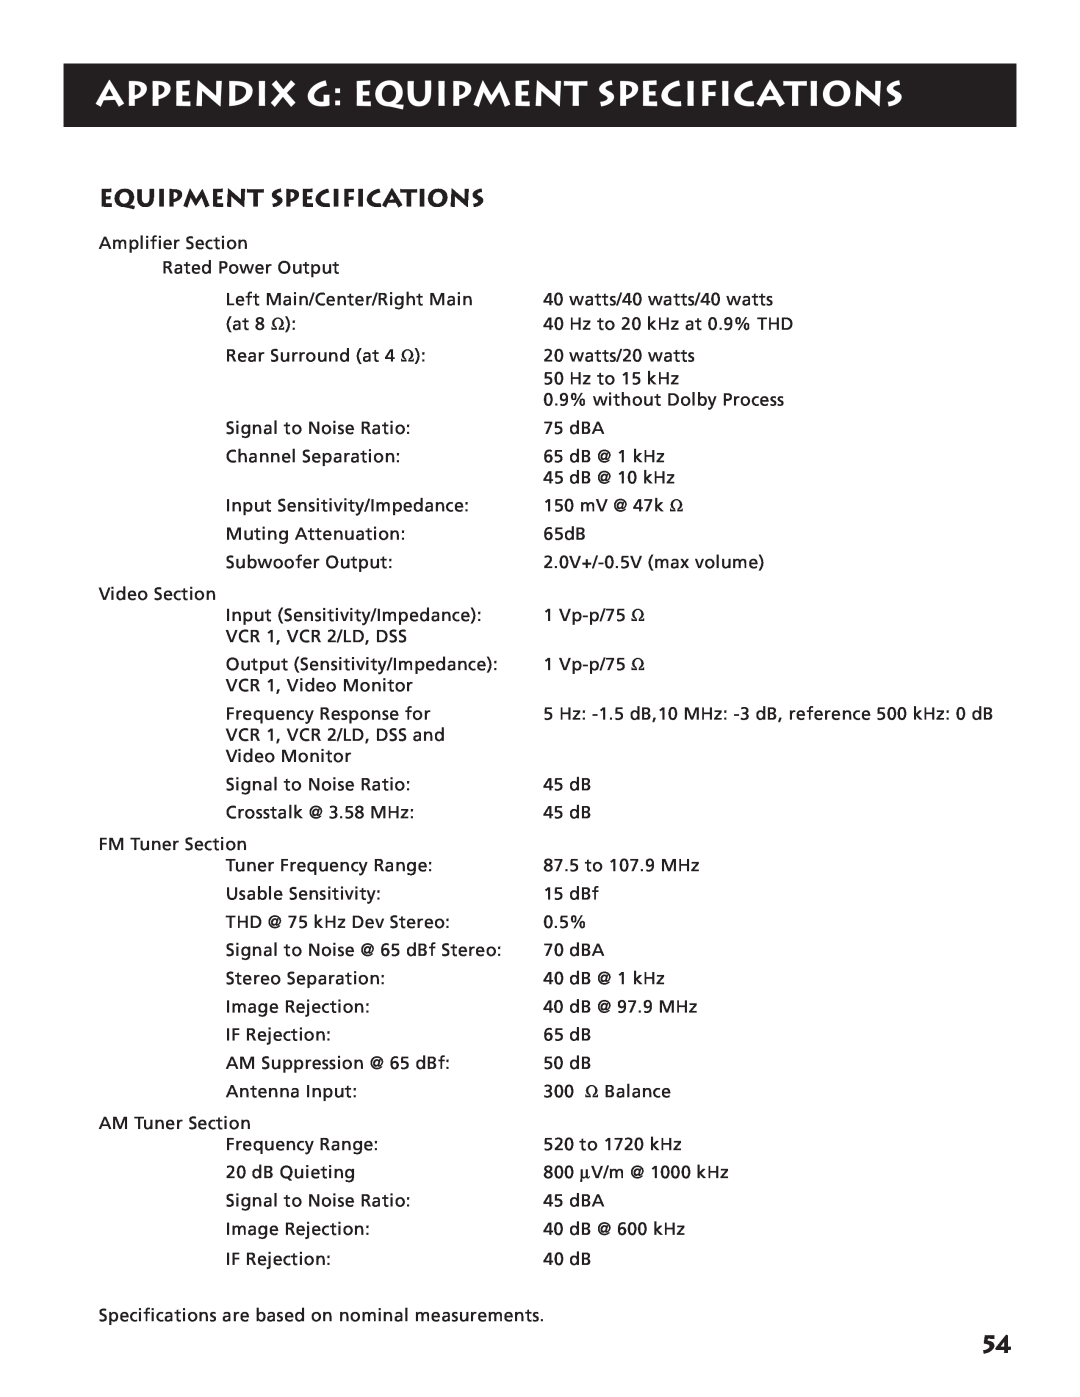 RCA RV3693 manual Appendix G Equipment Specifications 